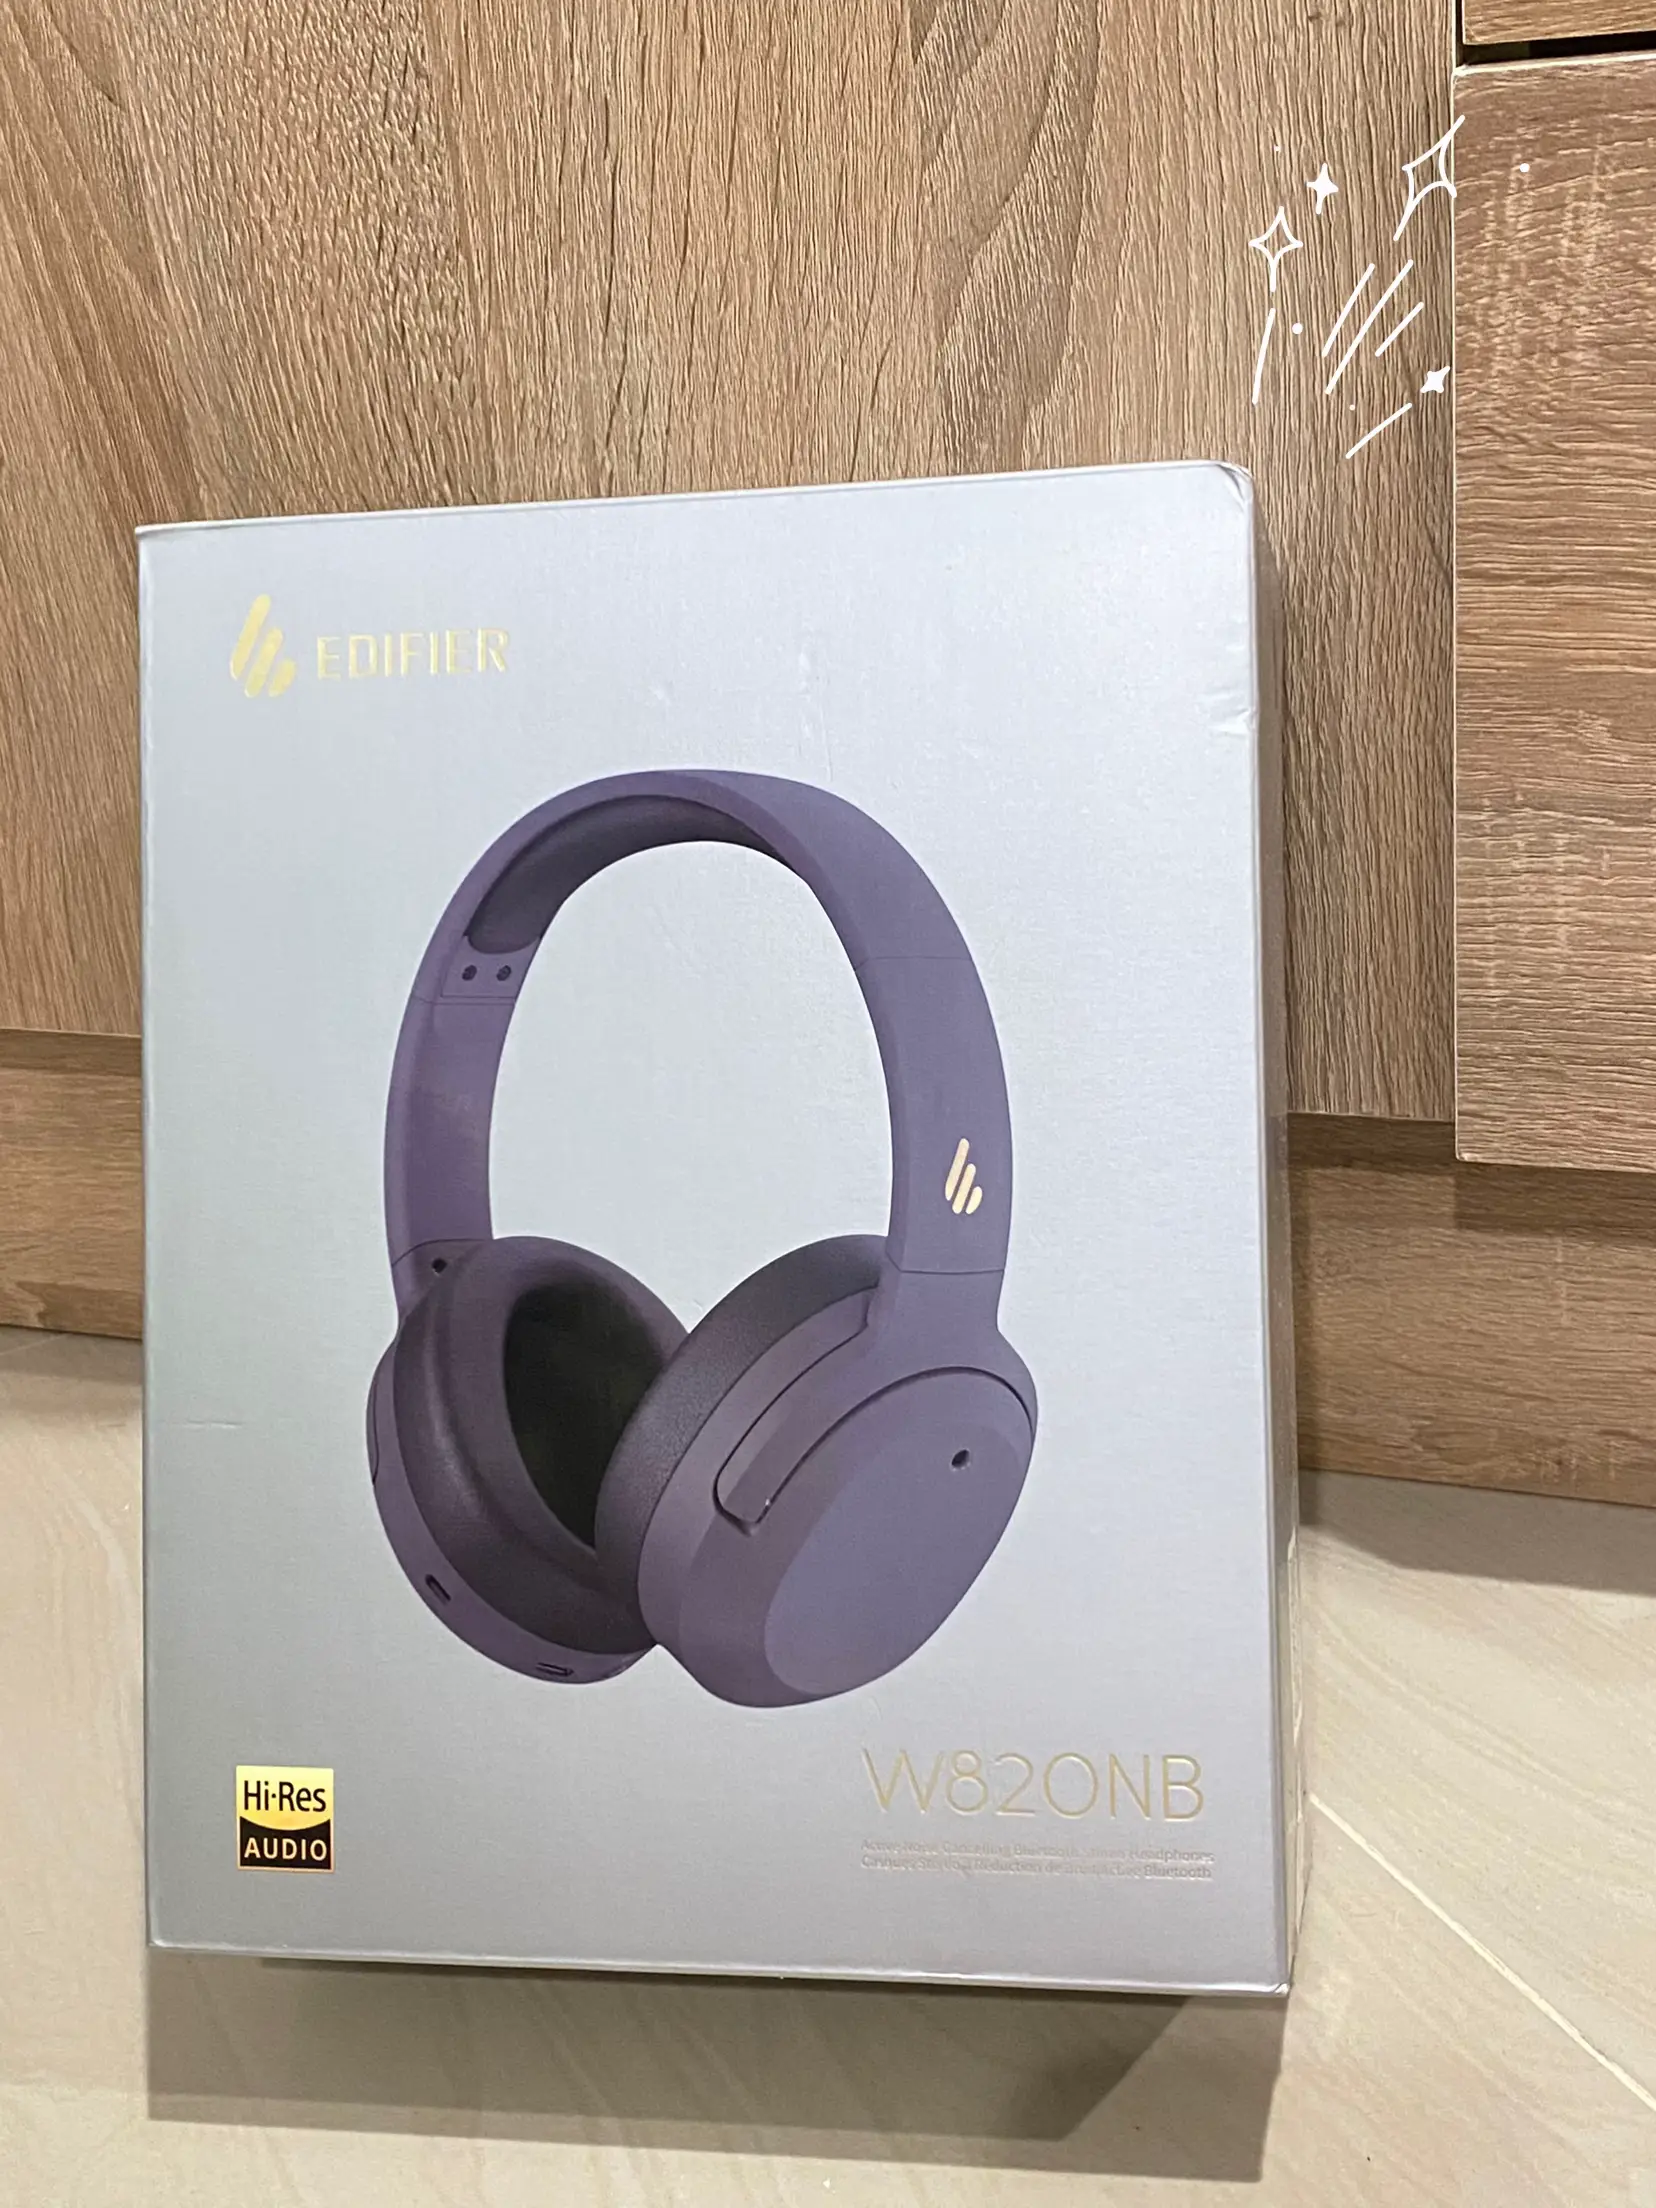 Edifier W820NB Plus Noise Cancelling Headphones – The Review Studio